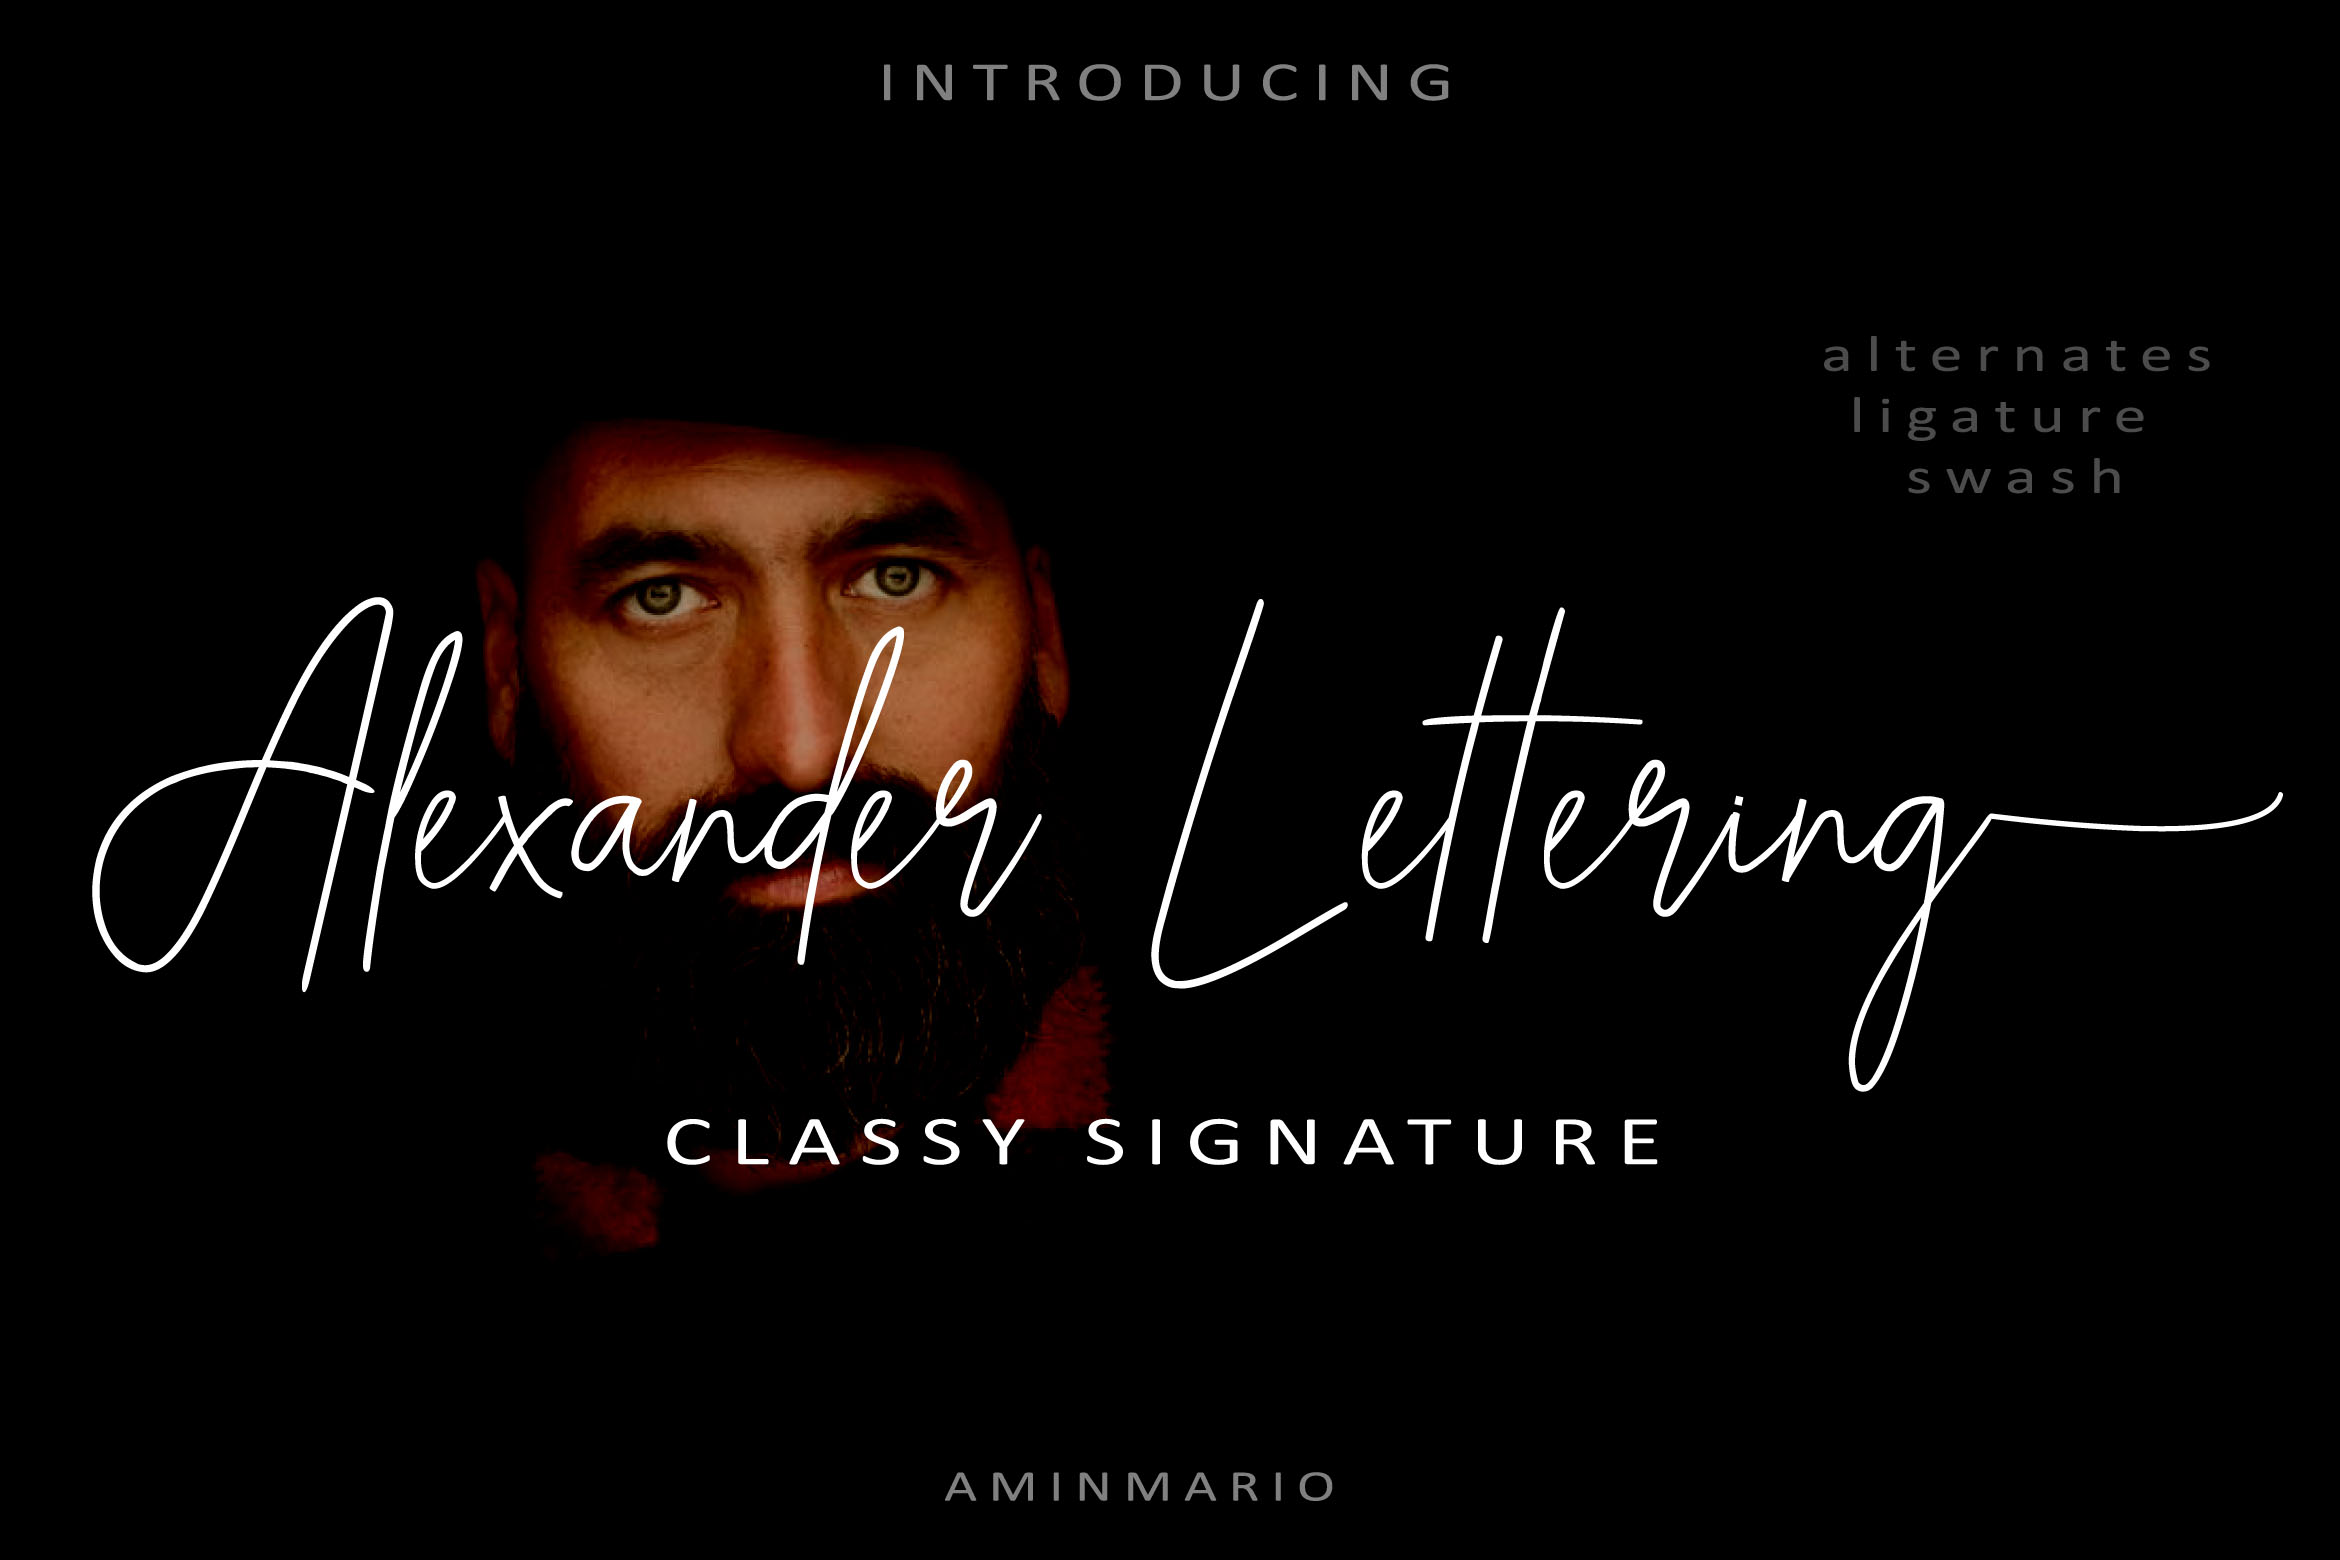 Alexander Lettering